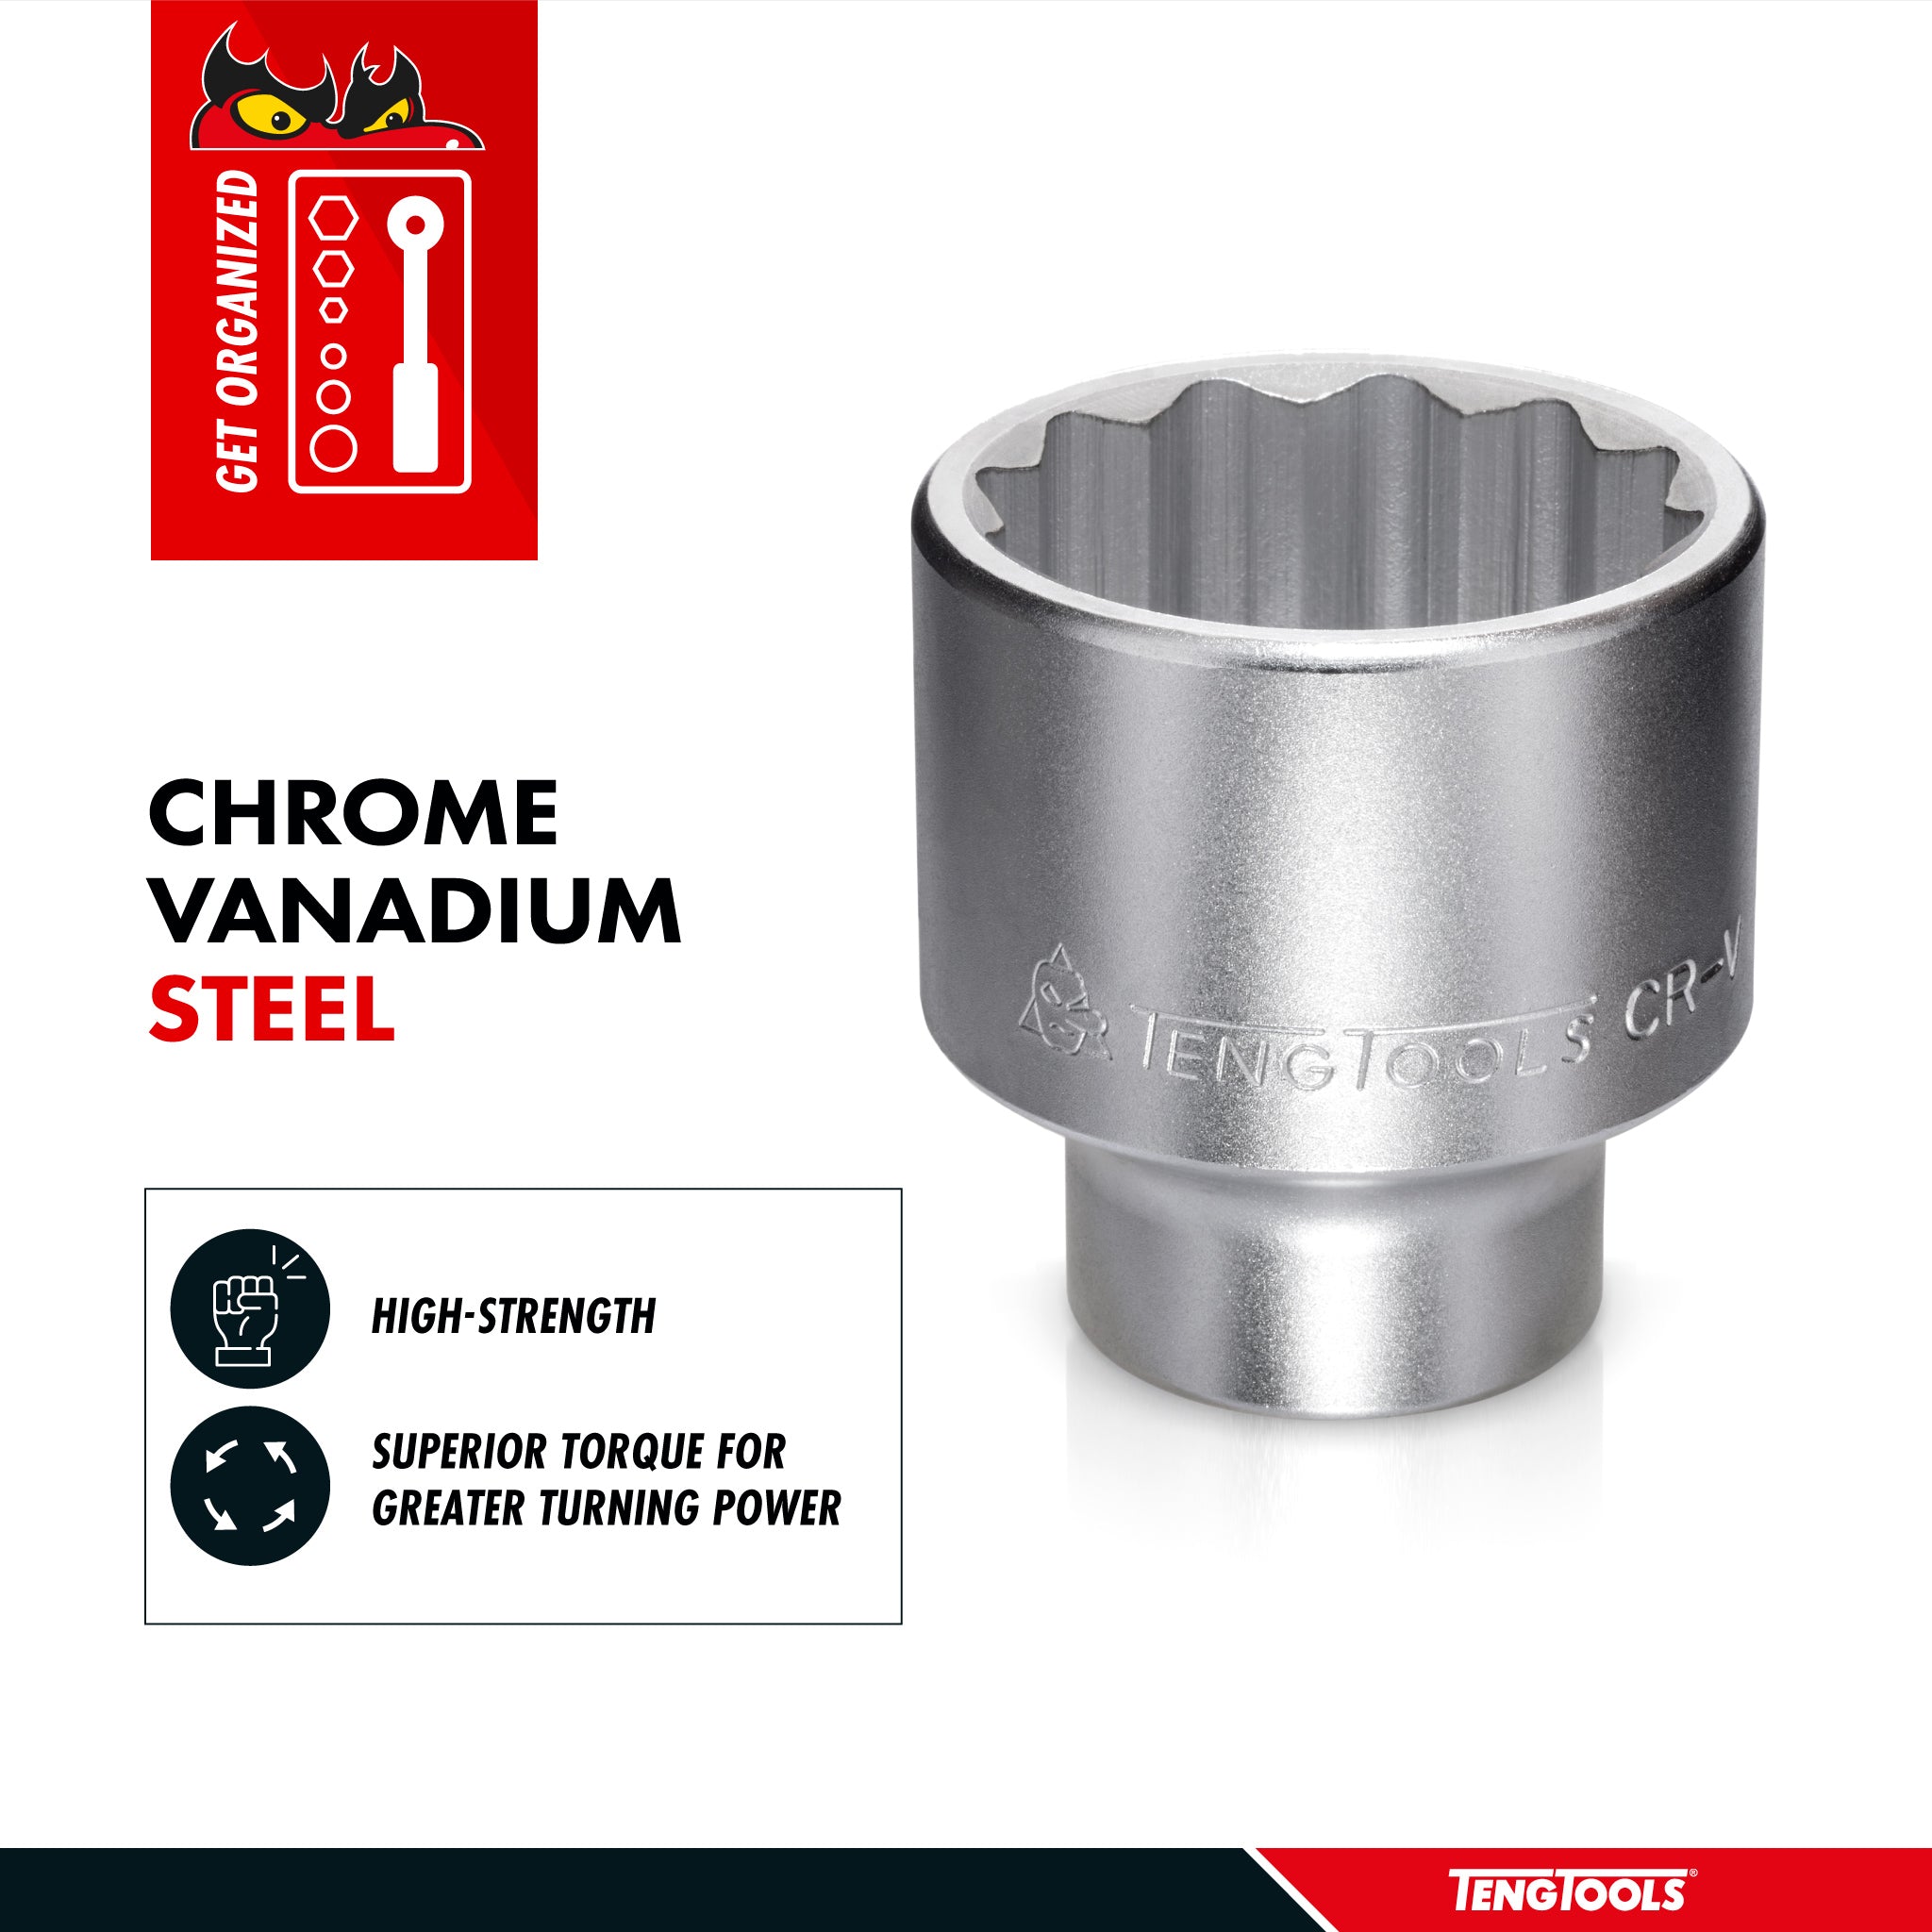 Teng Tools 1 Inch Drive 12 Point Metric Shallow Chrome Vanadium Sockets - 41mm